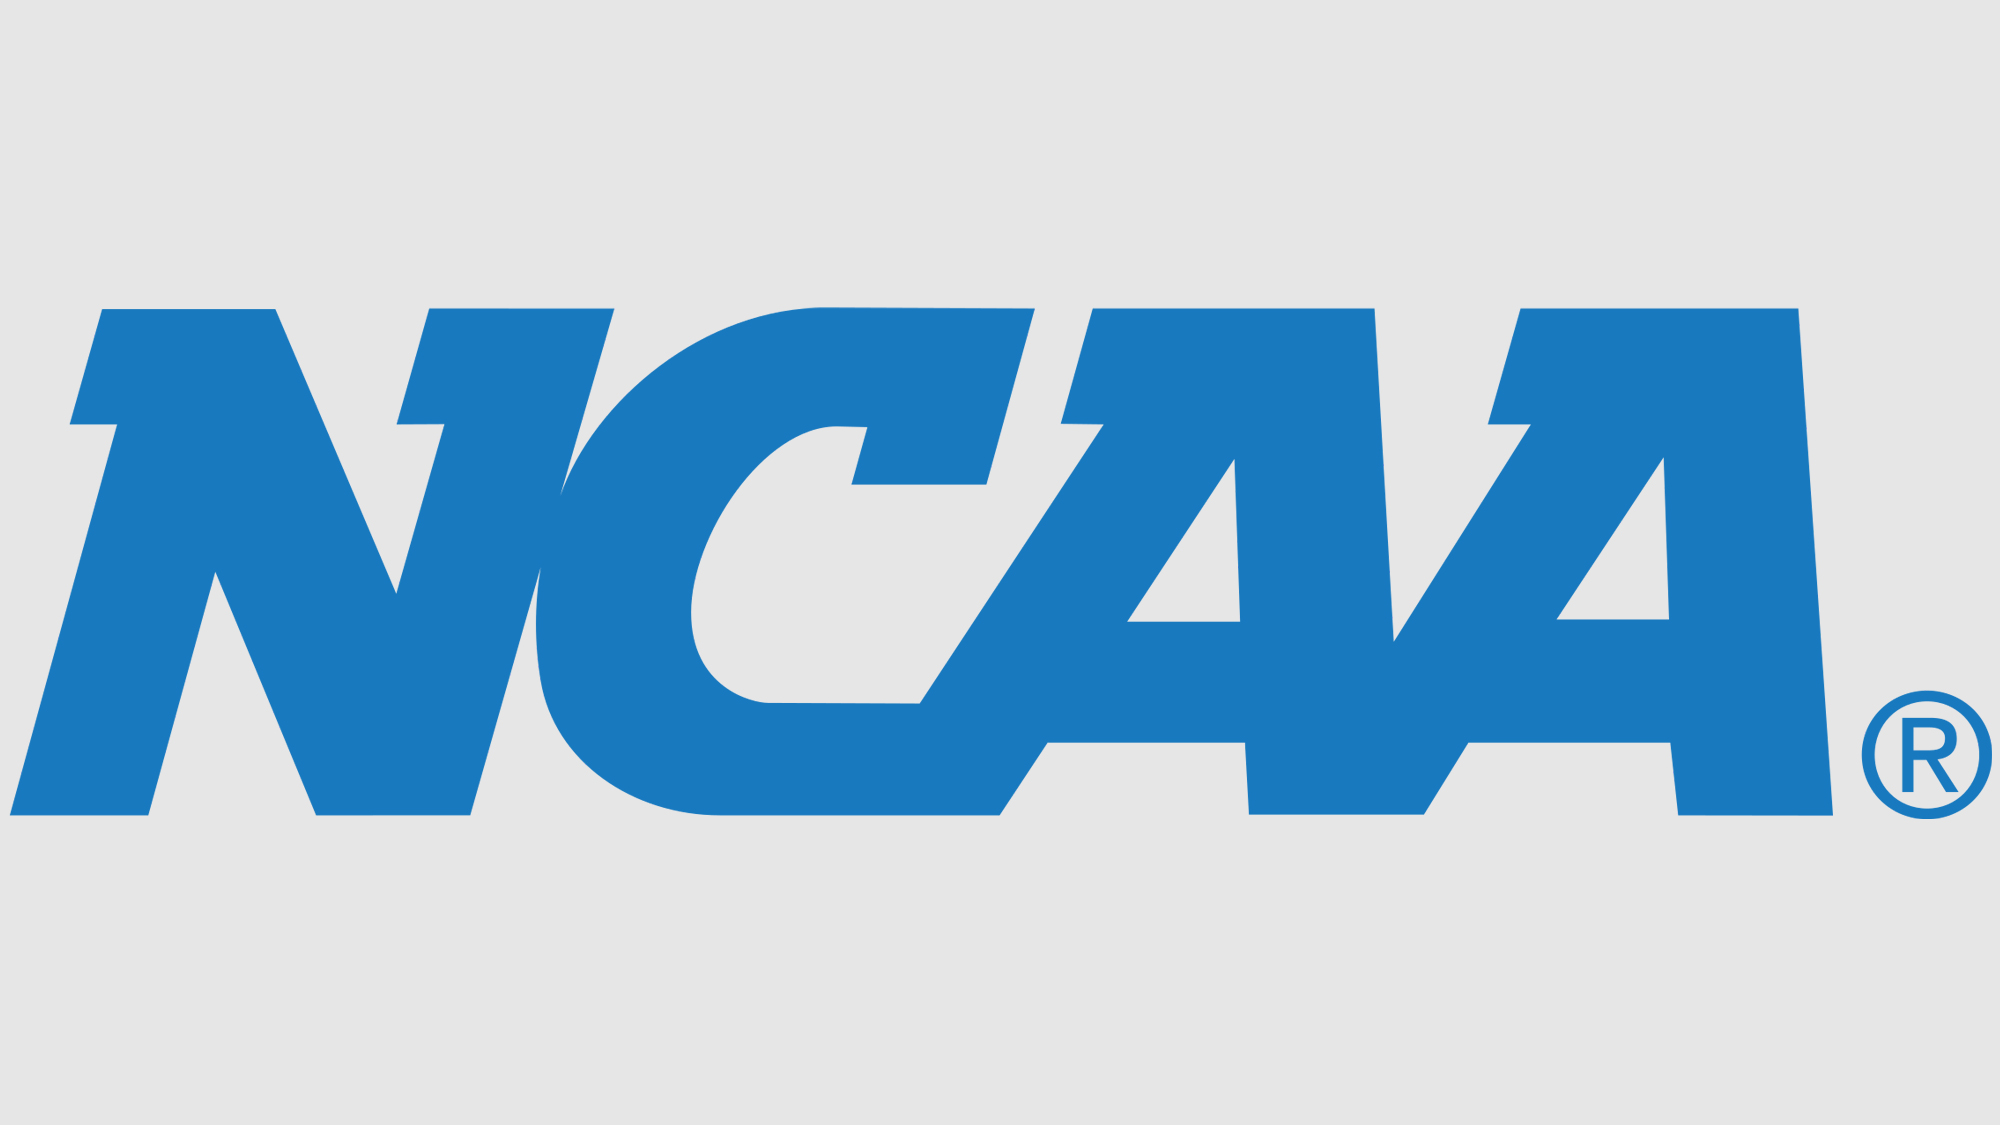 University of South Carolina Statement on NCAA Findings